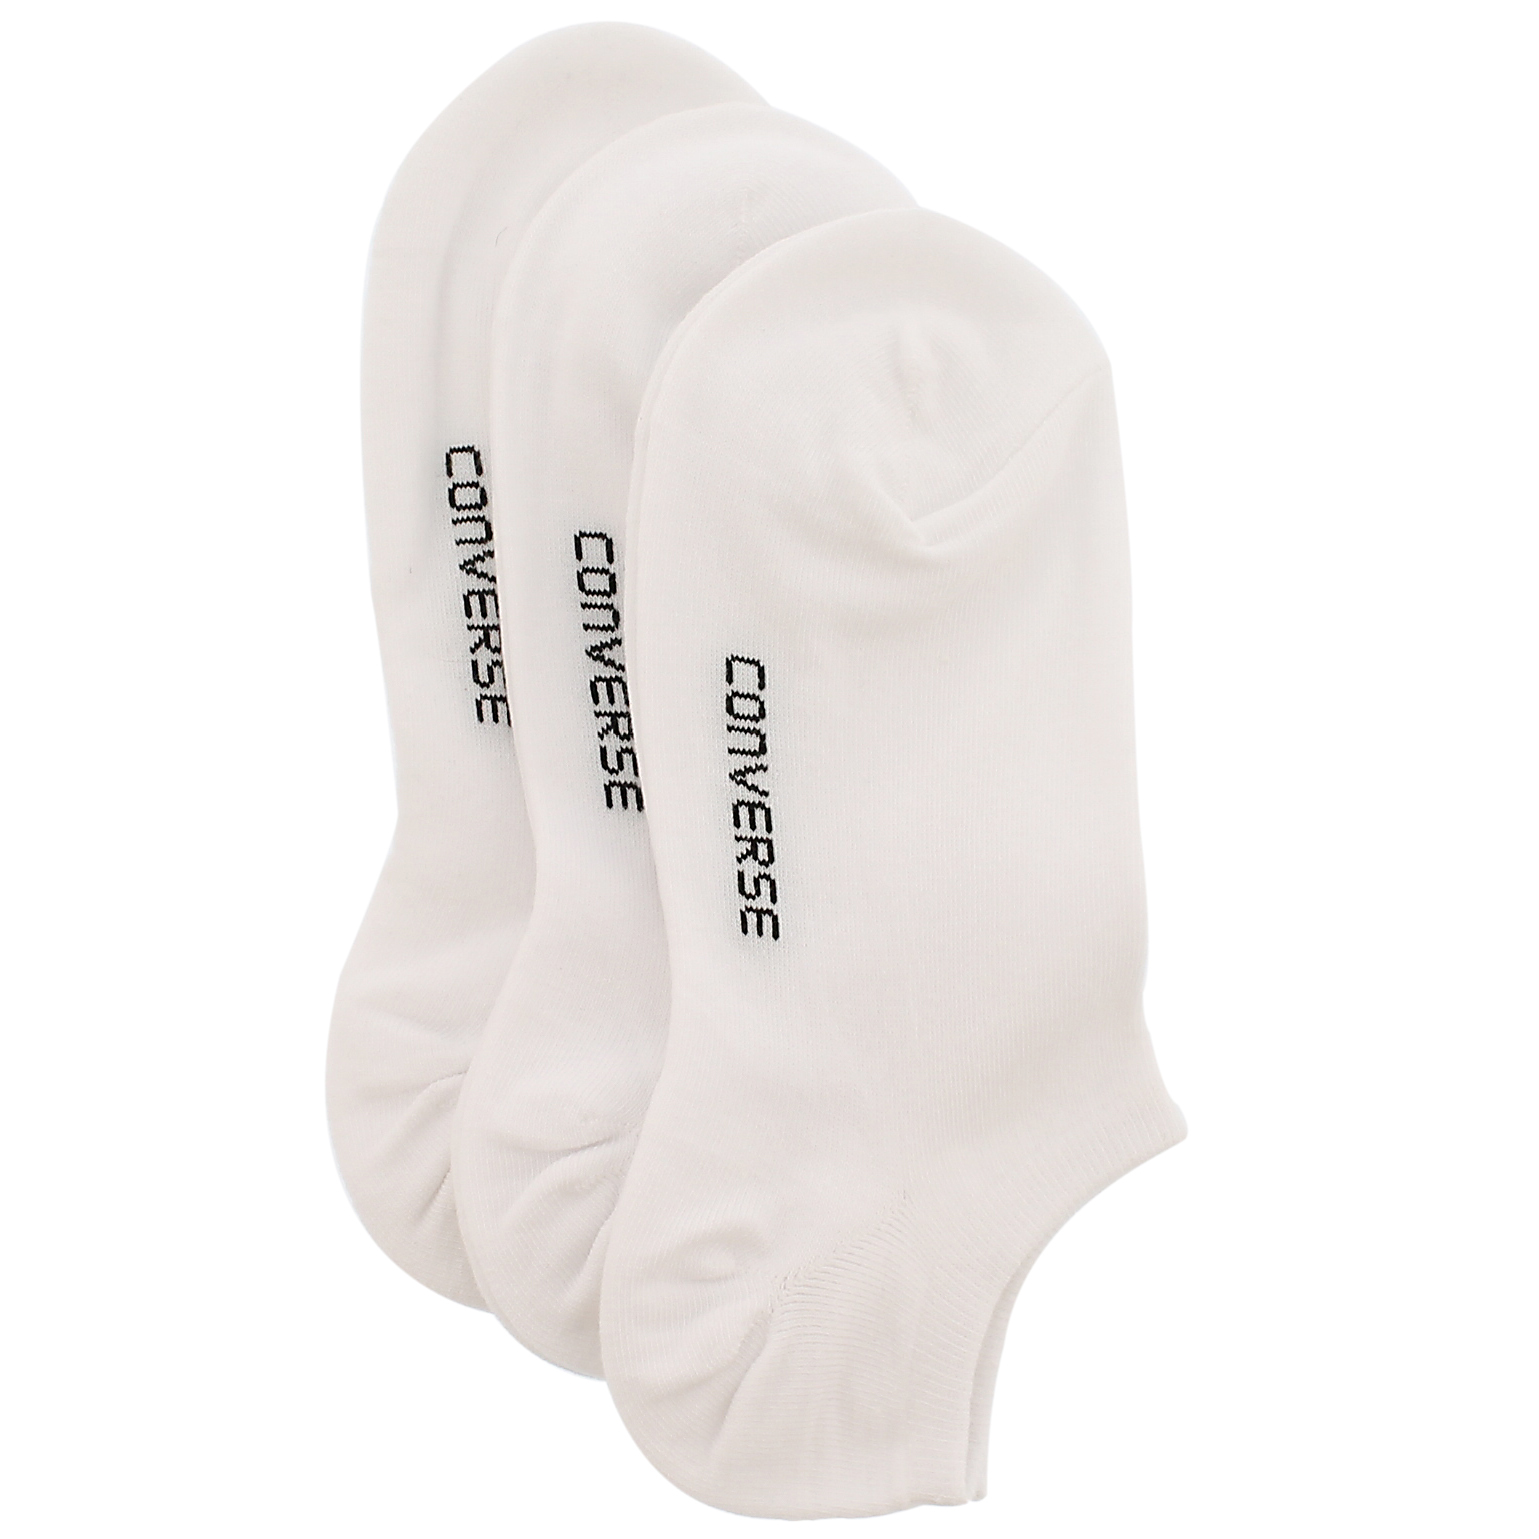 CONVERSE white ankle socks - | SoftMoc USA